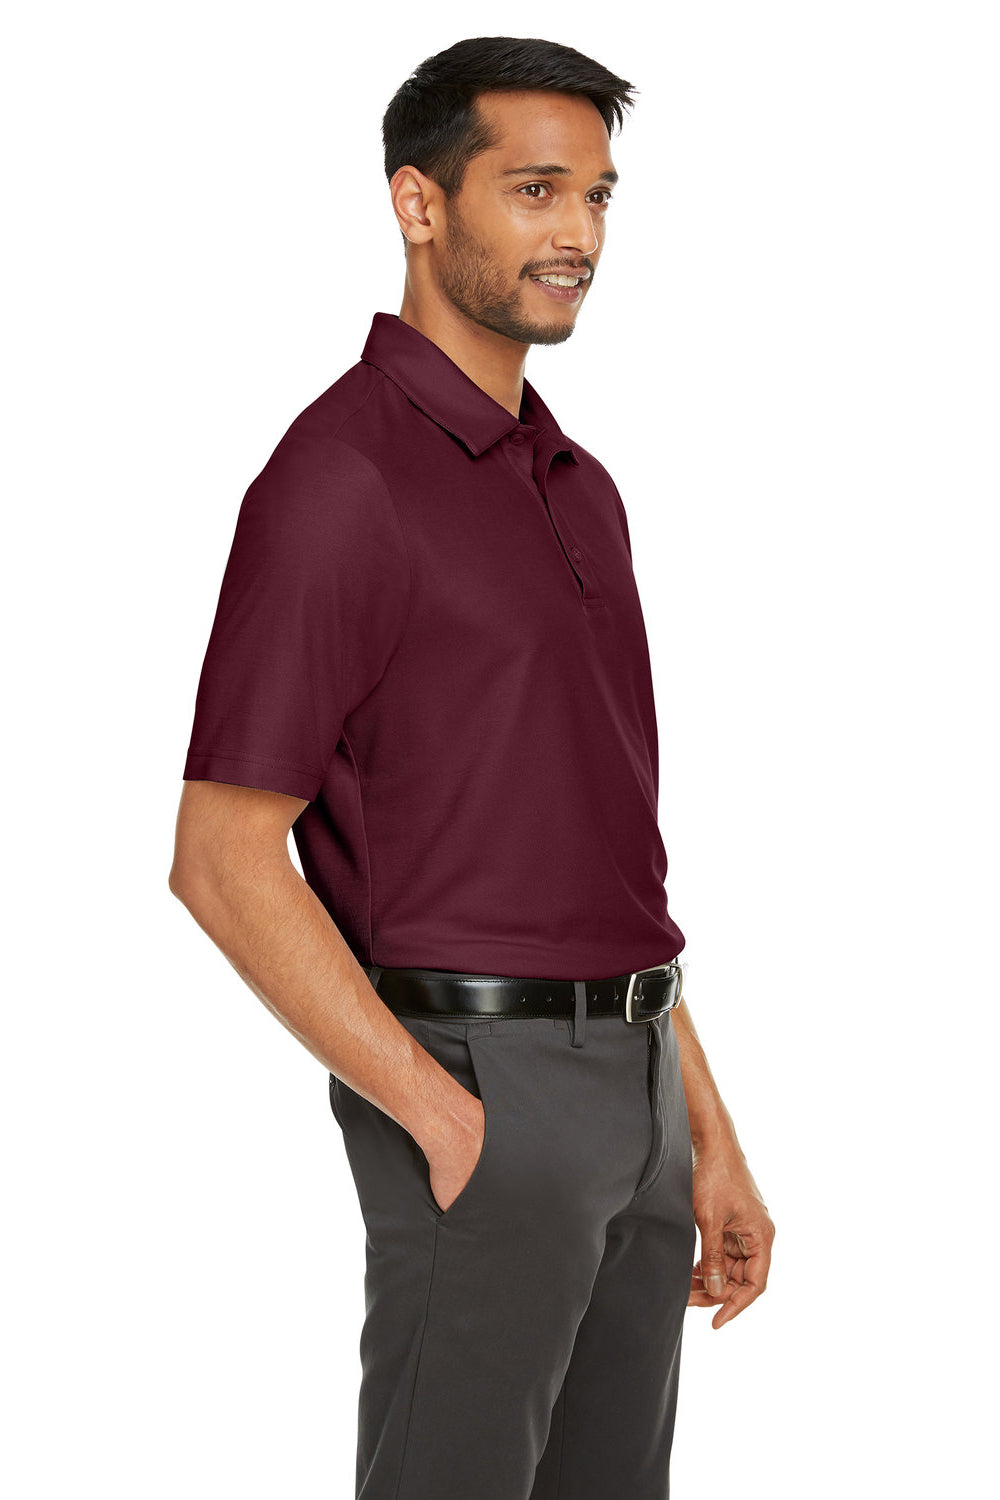 Core 365 CE112 Mens Fusion ChromaSoft Performance Moisture Wicking Short Sleeve Polo Shirt Burgundy 3Q